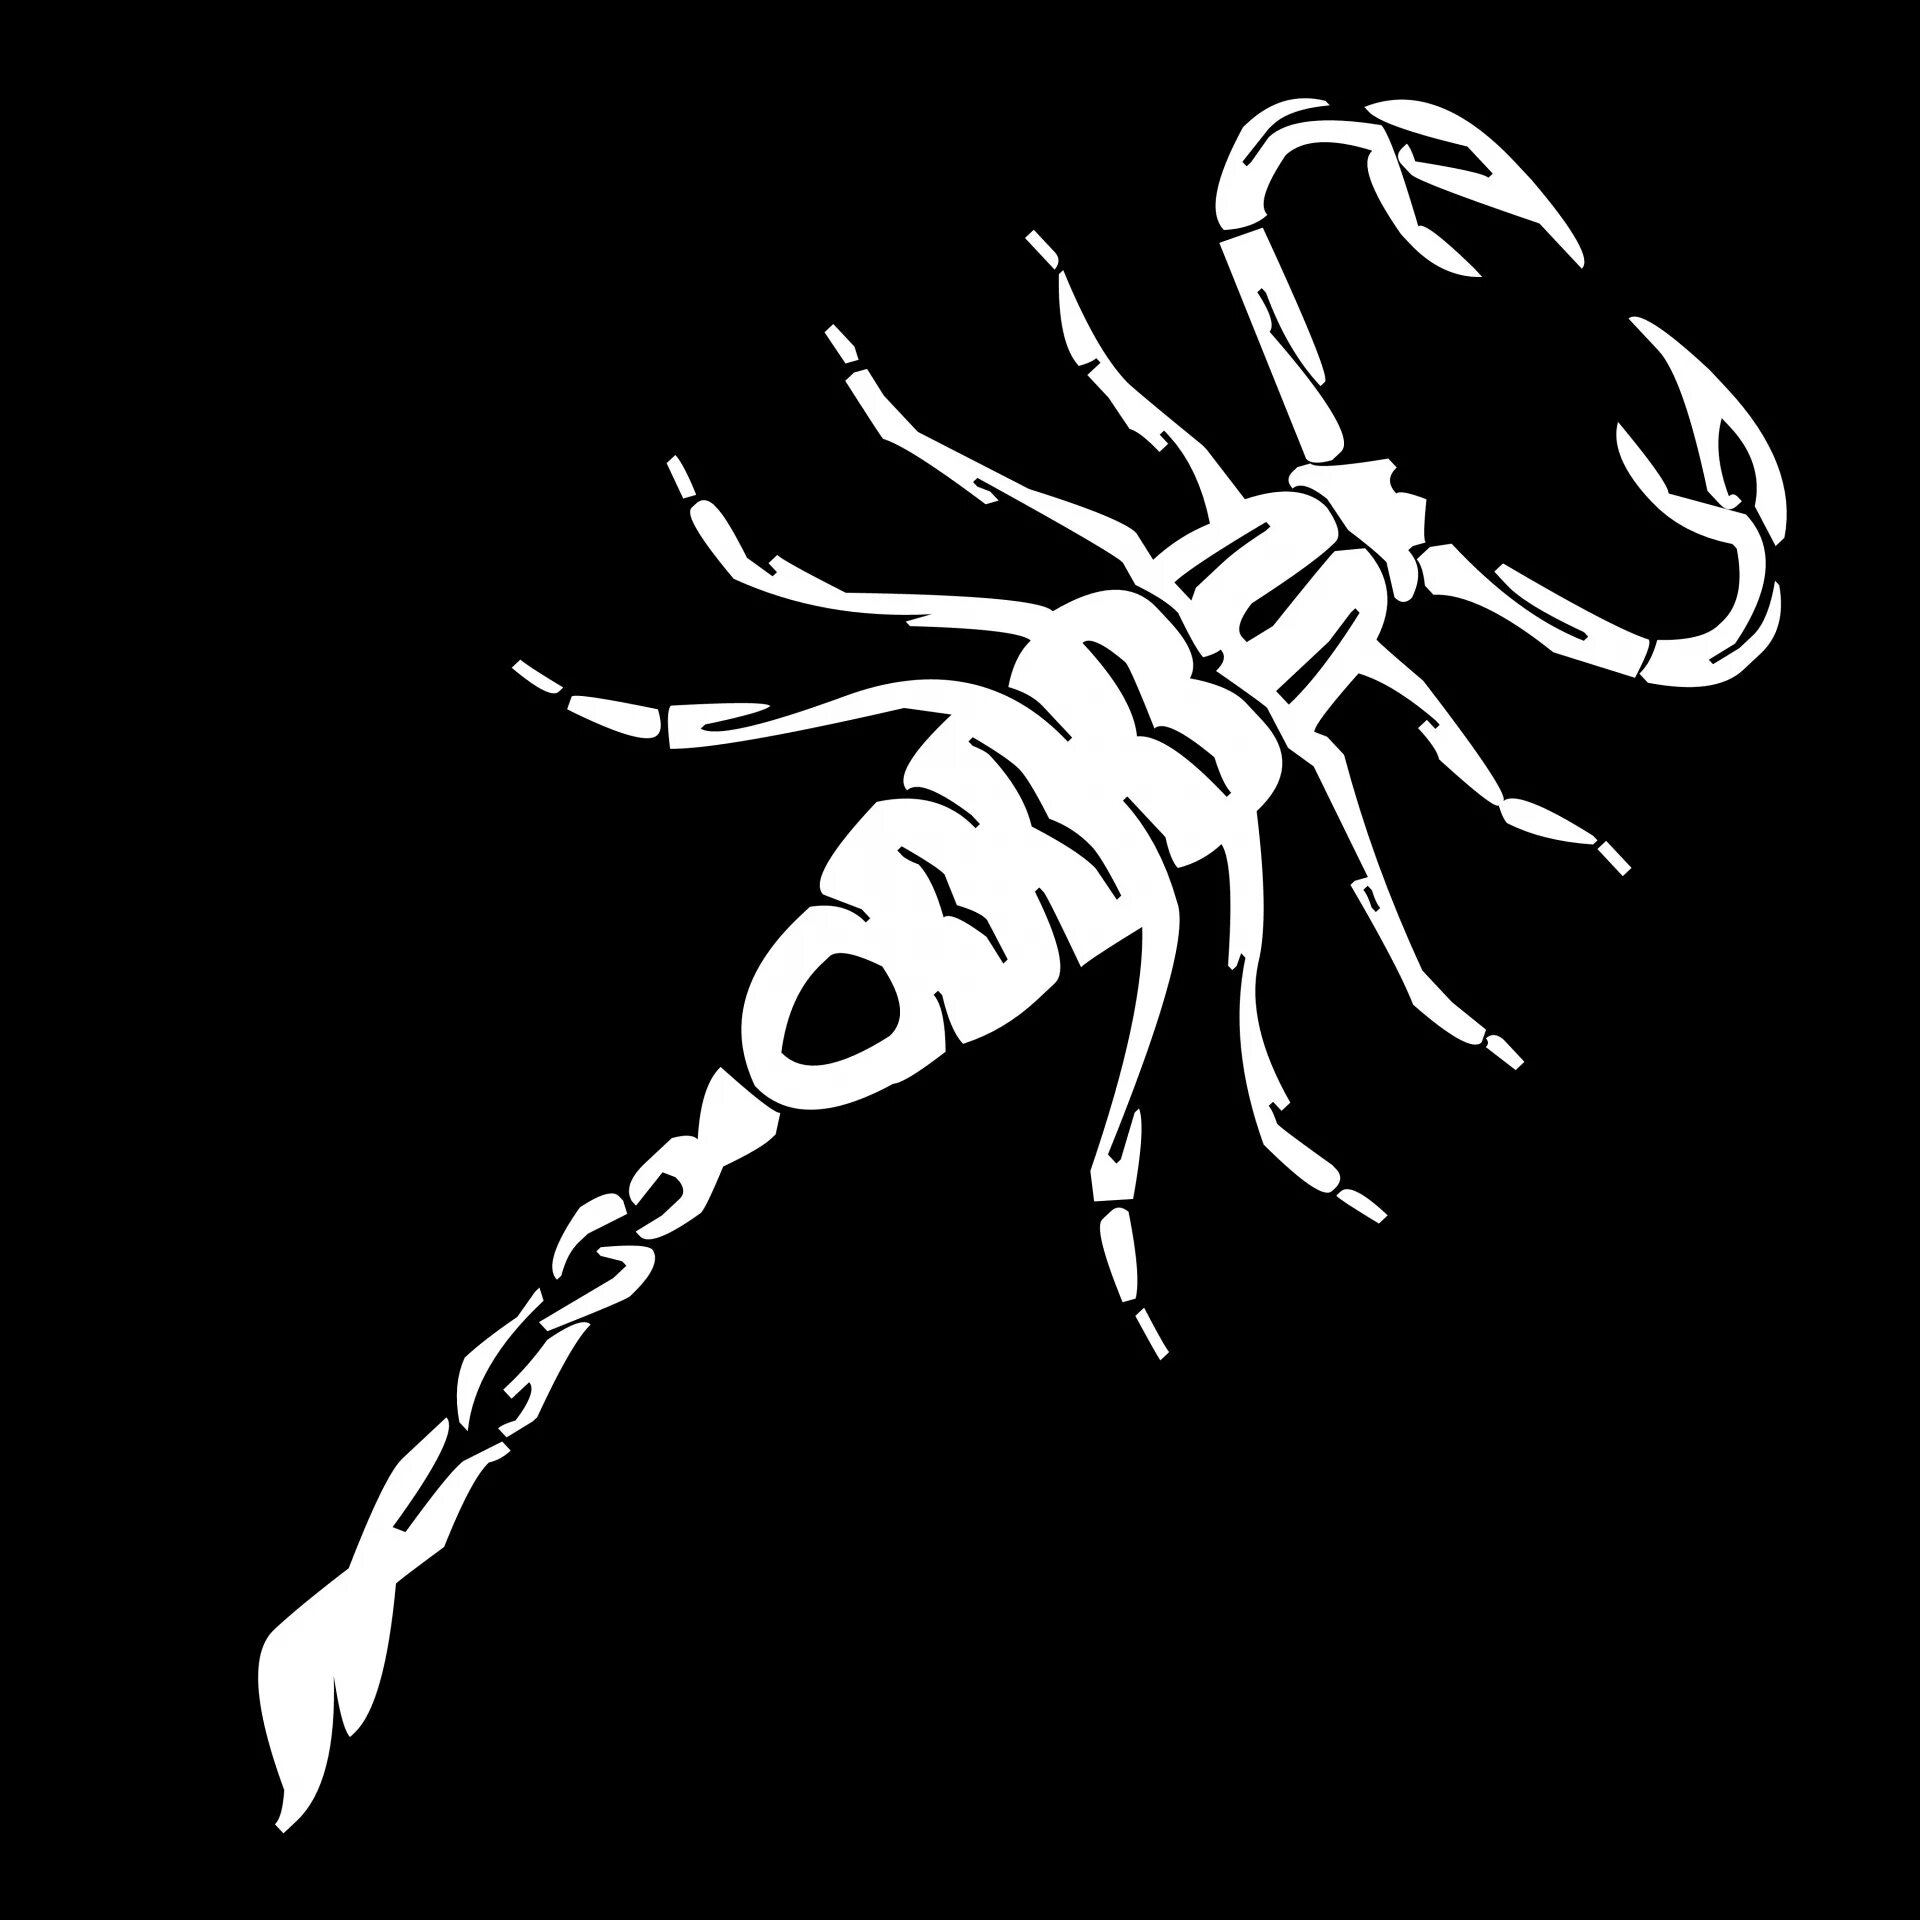 Scorpion white. Белый Скорпион. Скорпион на темном фоне. Скорпион карандашом. Скорпион Минимализм.